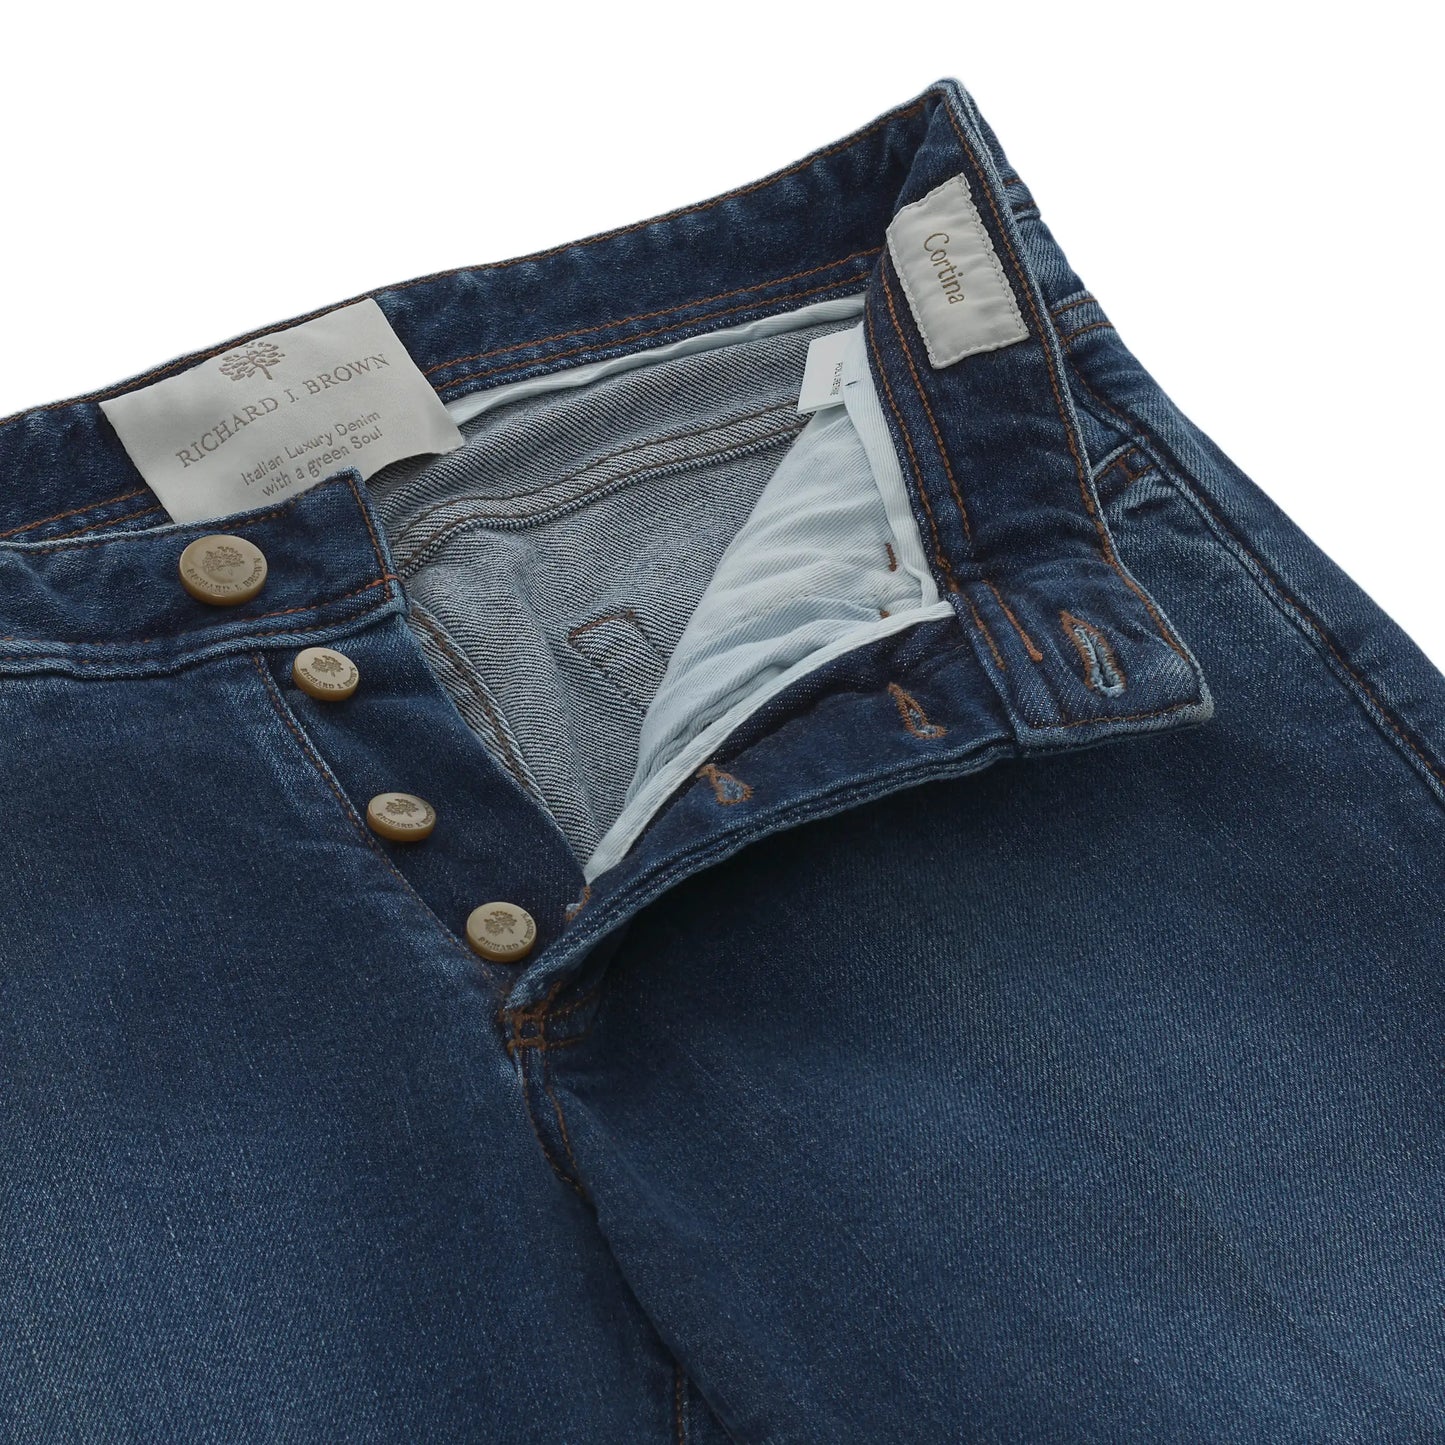 Slim-Fit Cotton Jeans in Denim Blue